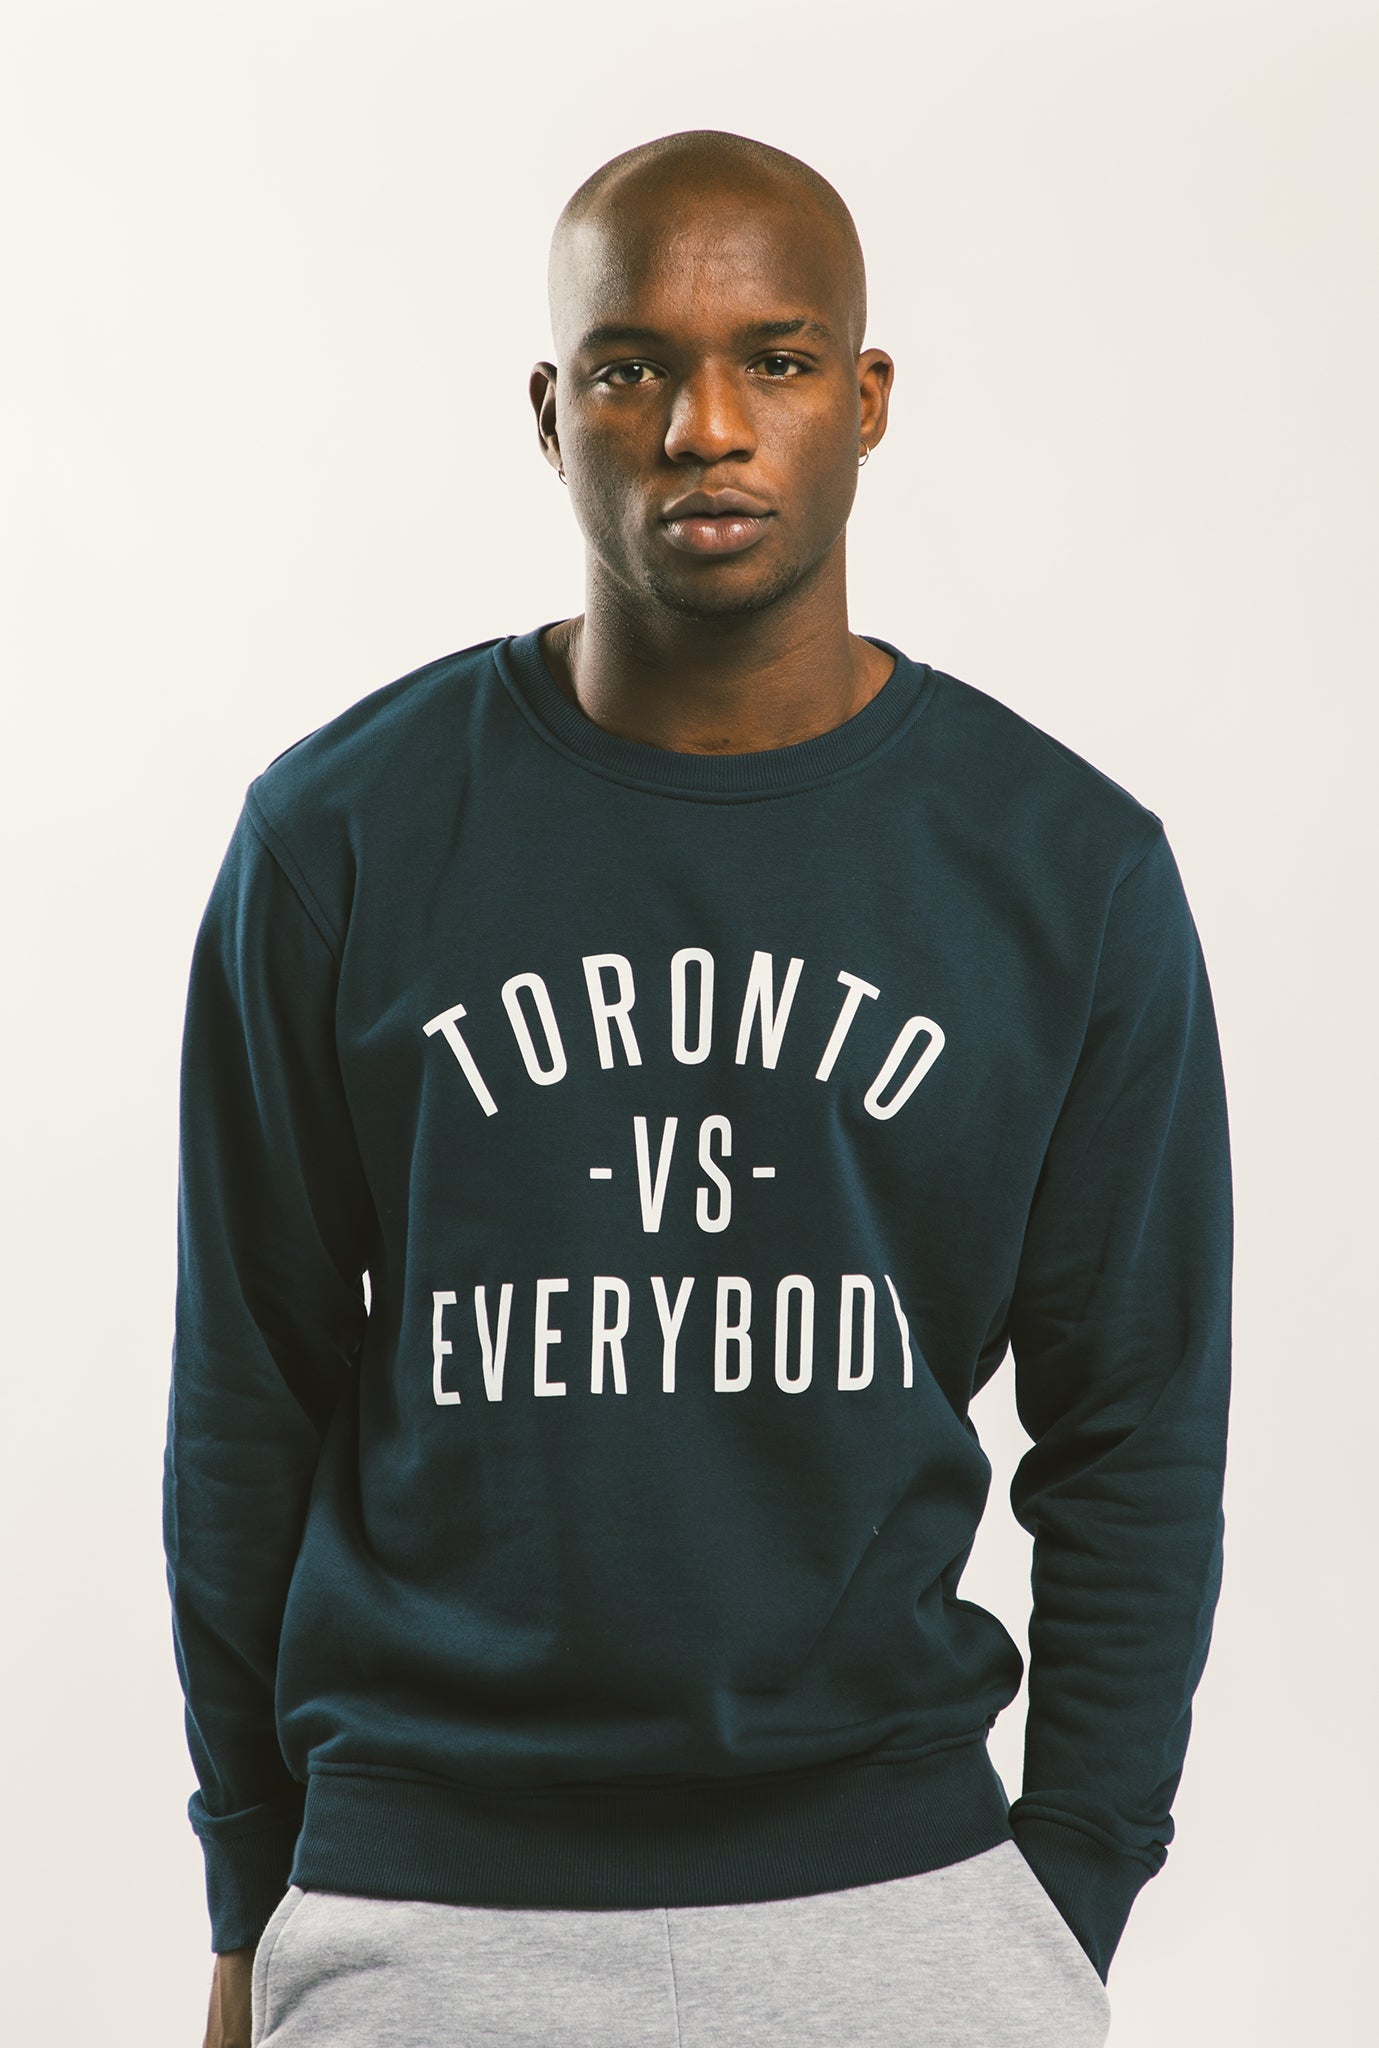 Toronto -vs- Everybody Crewneck - Navy